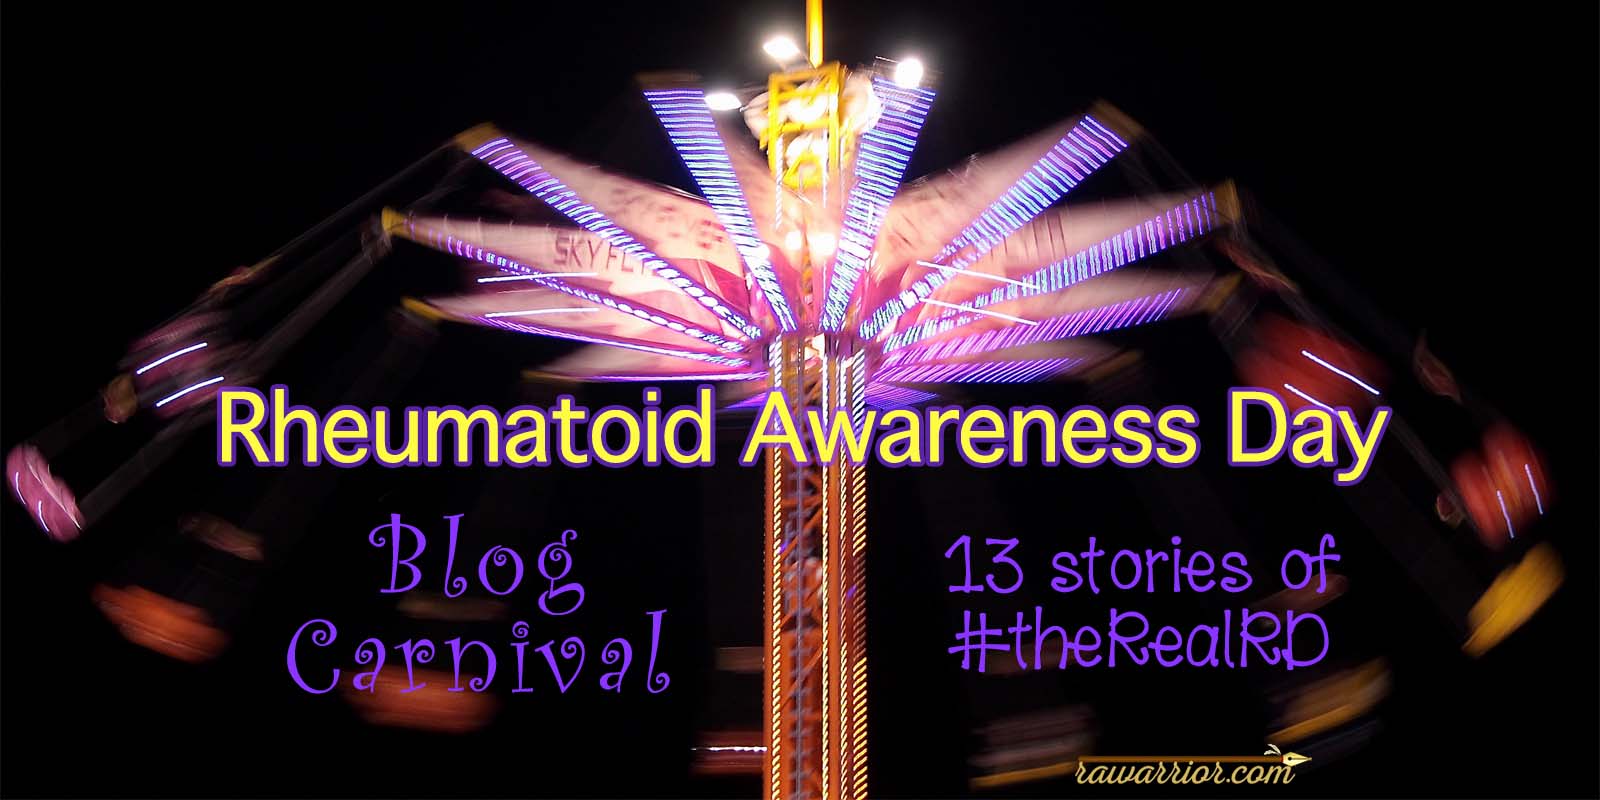 Rheumatoid Arthritis Day Blog Carnival